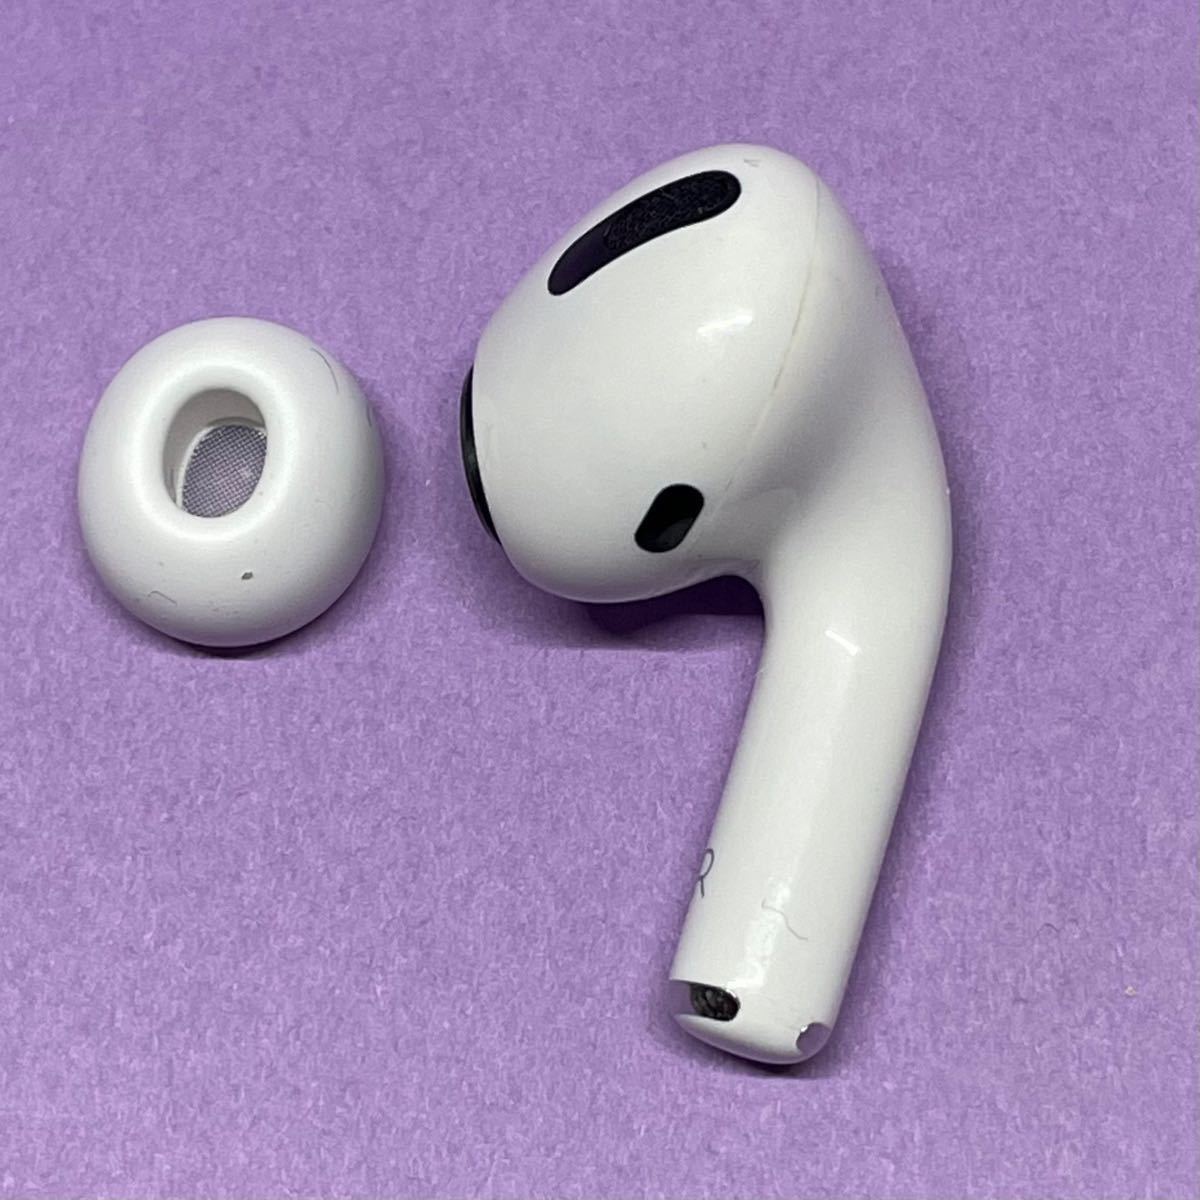 Apple AirPods Pro 右耳（本物）GX8CRQUJJQH3